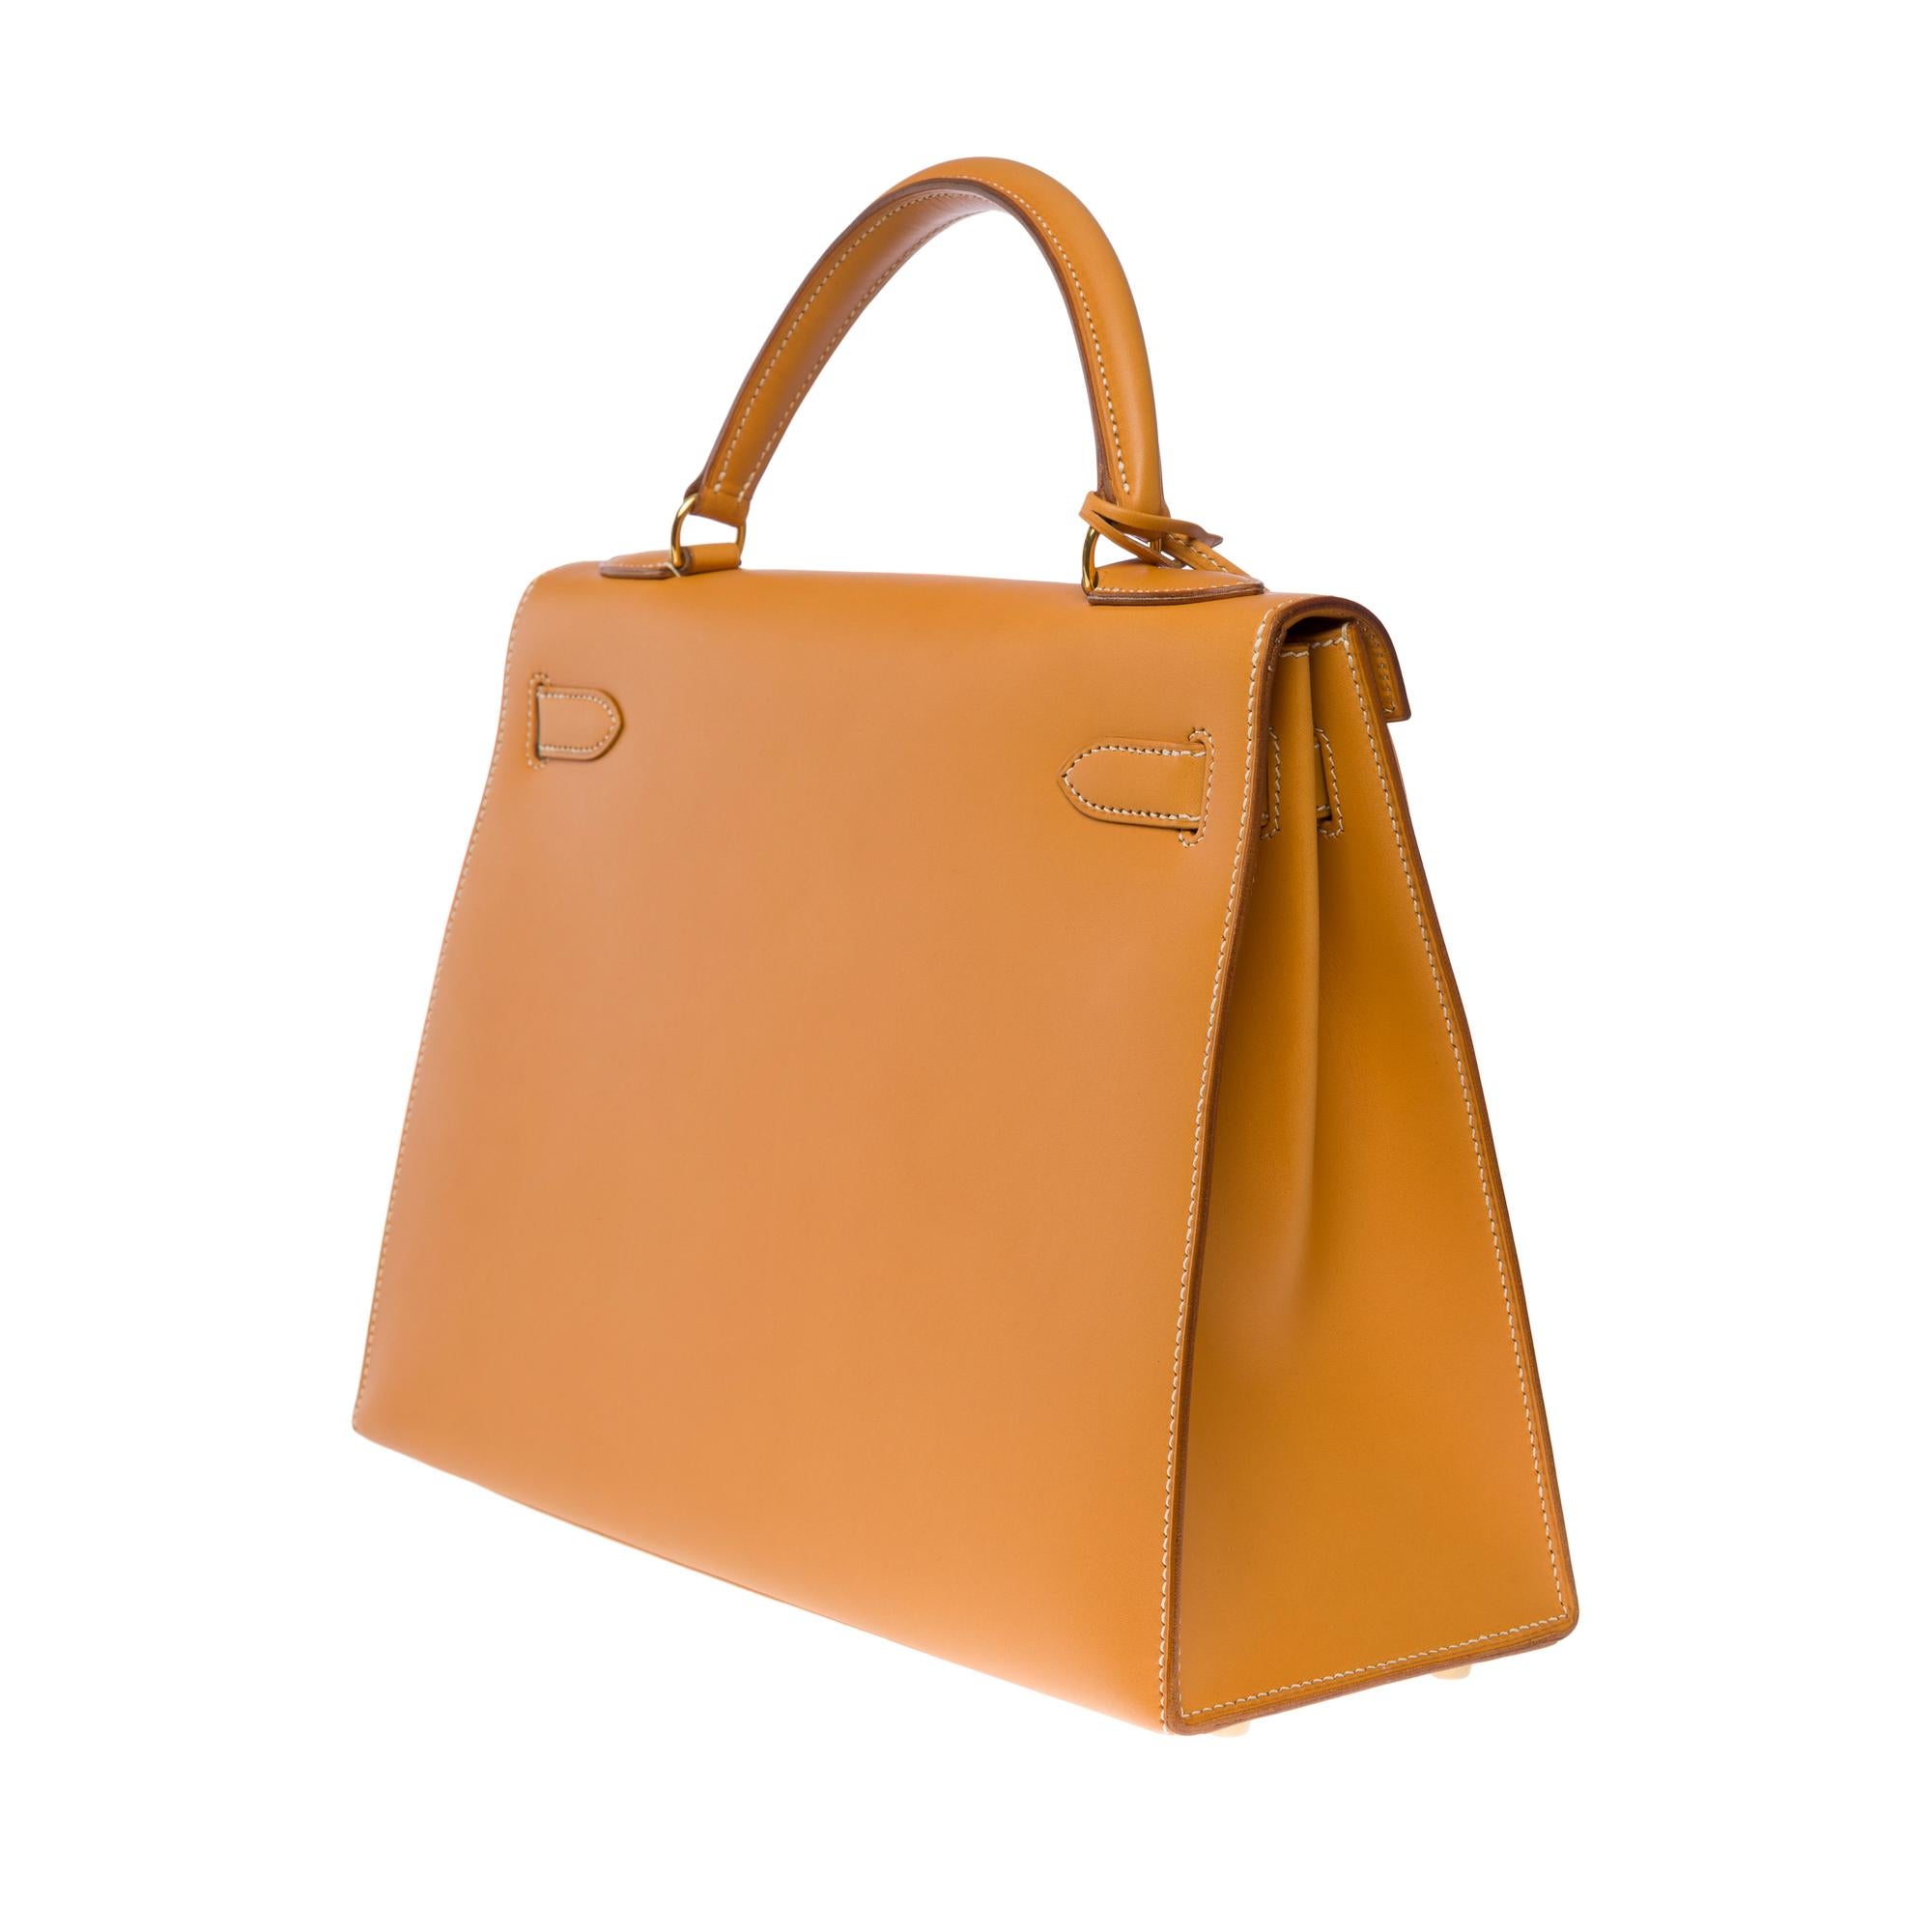 Very Rare Hermès Kelly 32 sellier handbag strap in Gold Chamonix leather , GHW 1